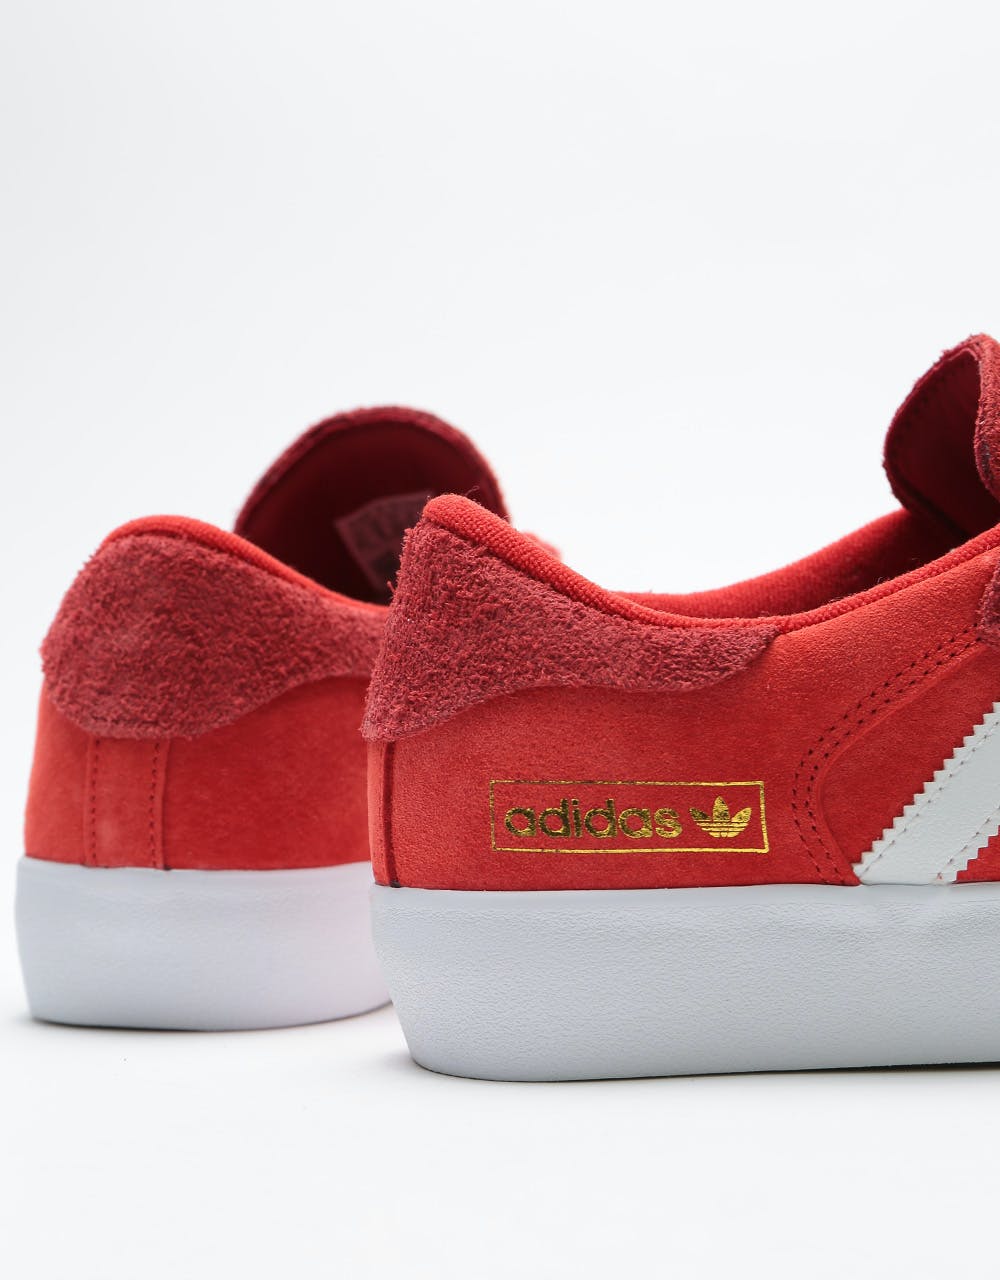 Adidas Matchbreak Super Skate Shoes - Brick/White/Gold Metallic